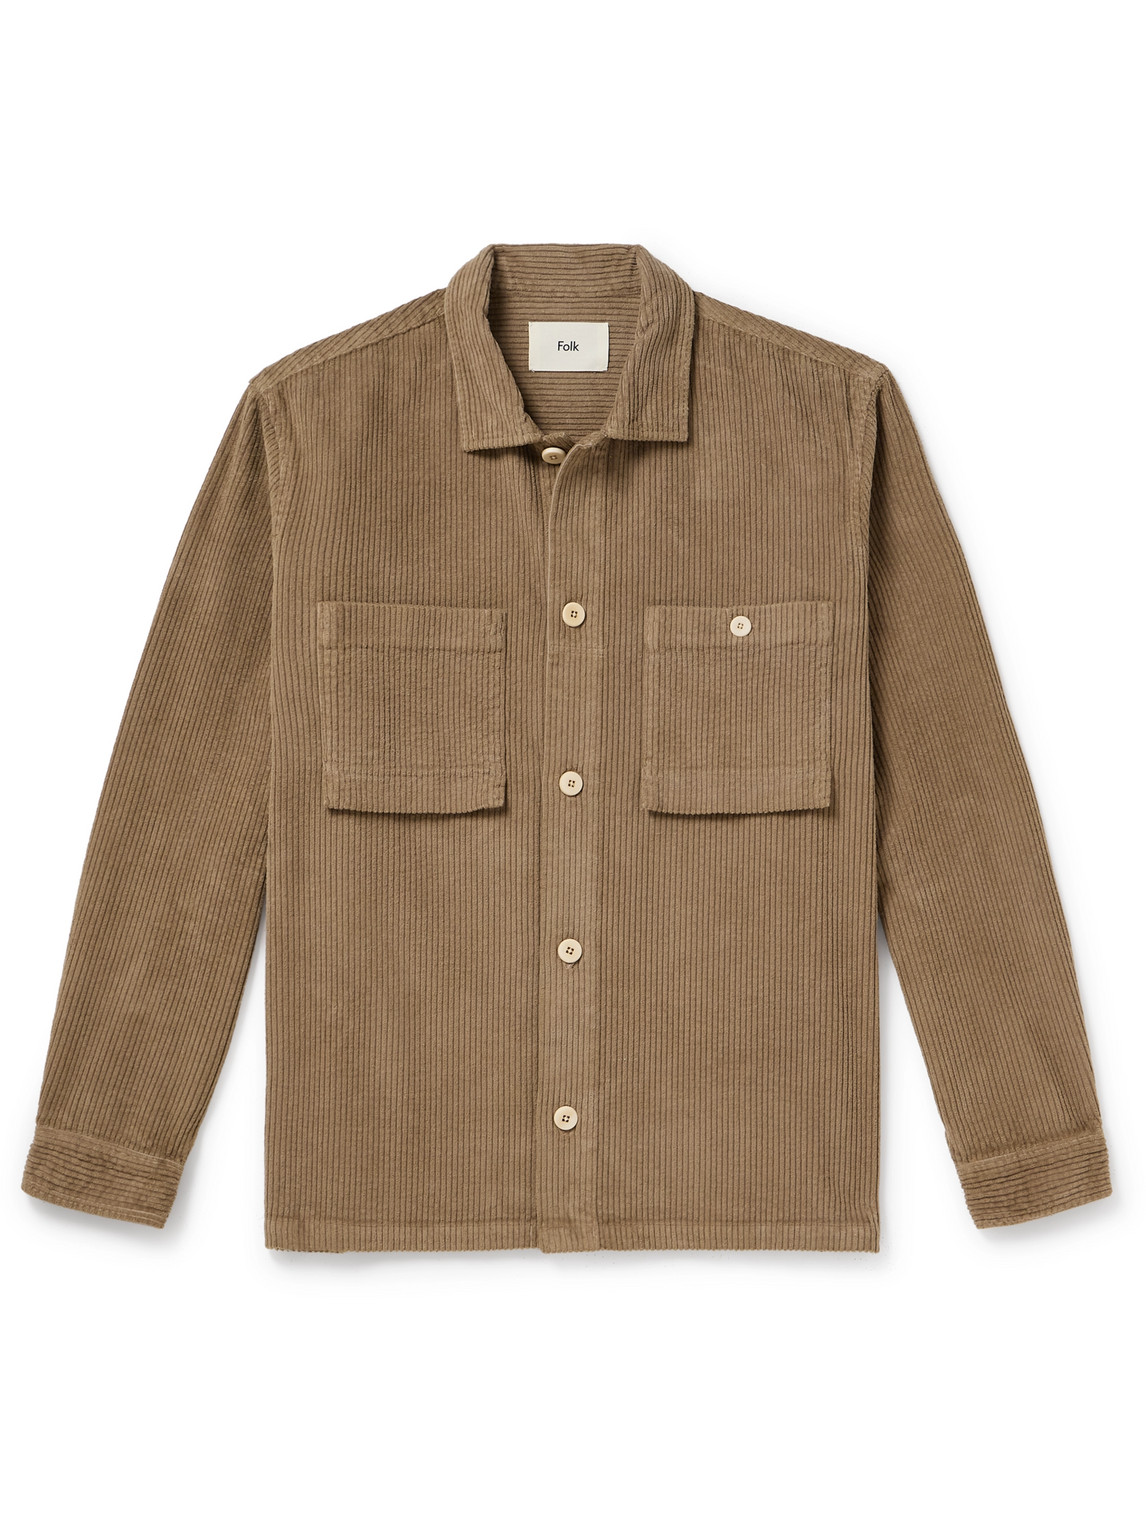 Folk Patch Cotton-corduroy Shirt Jacket In Brown